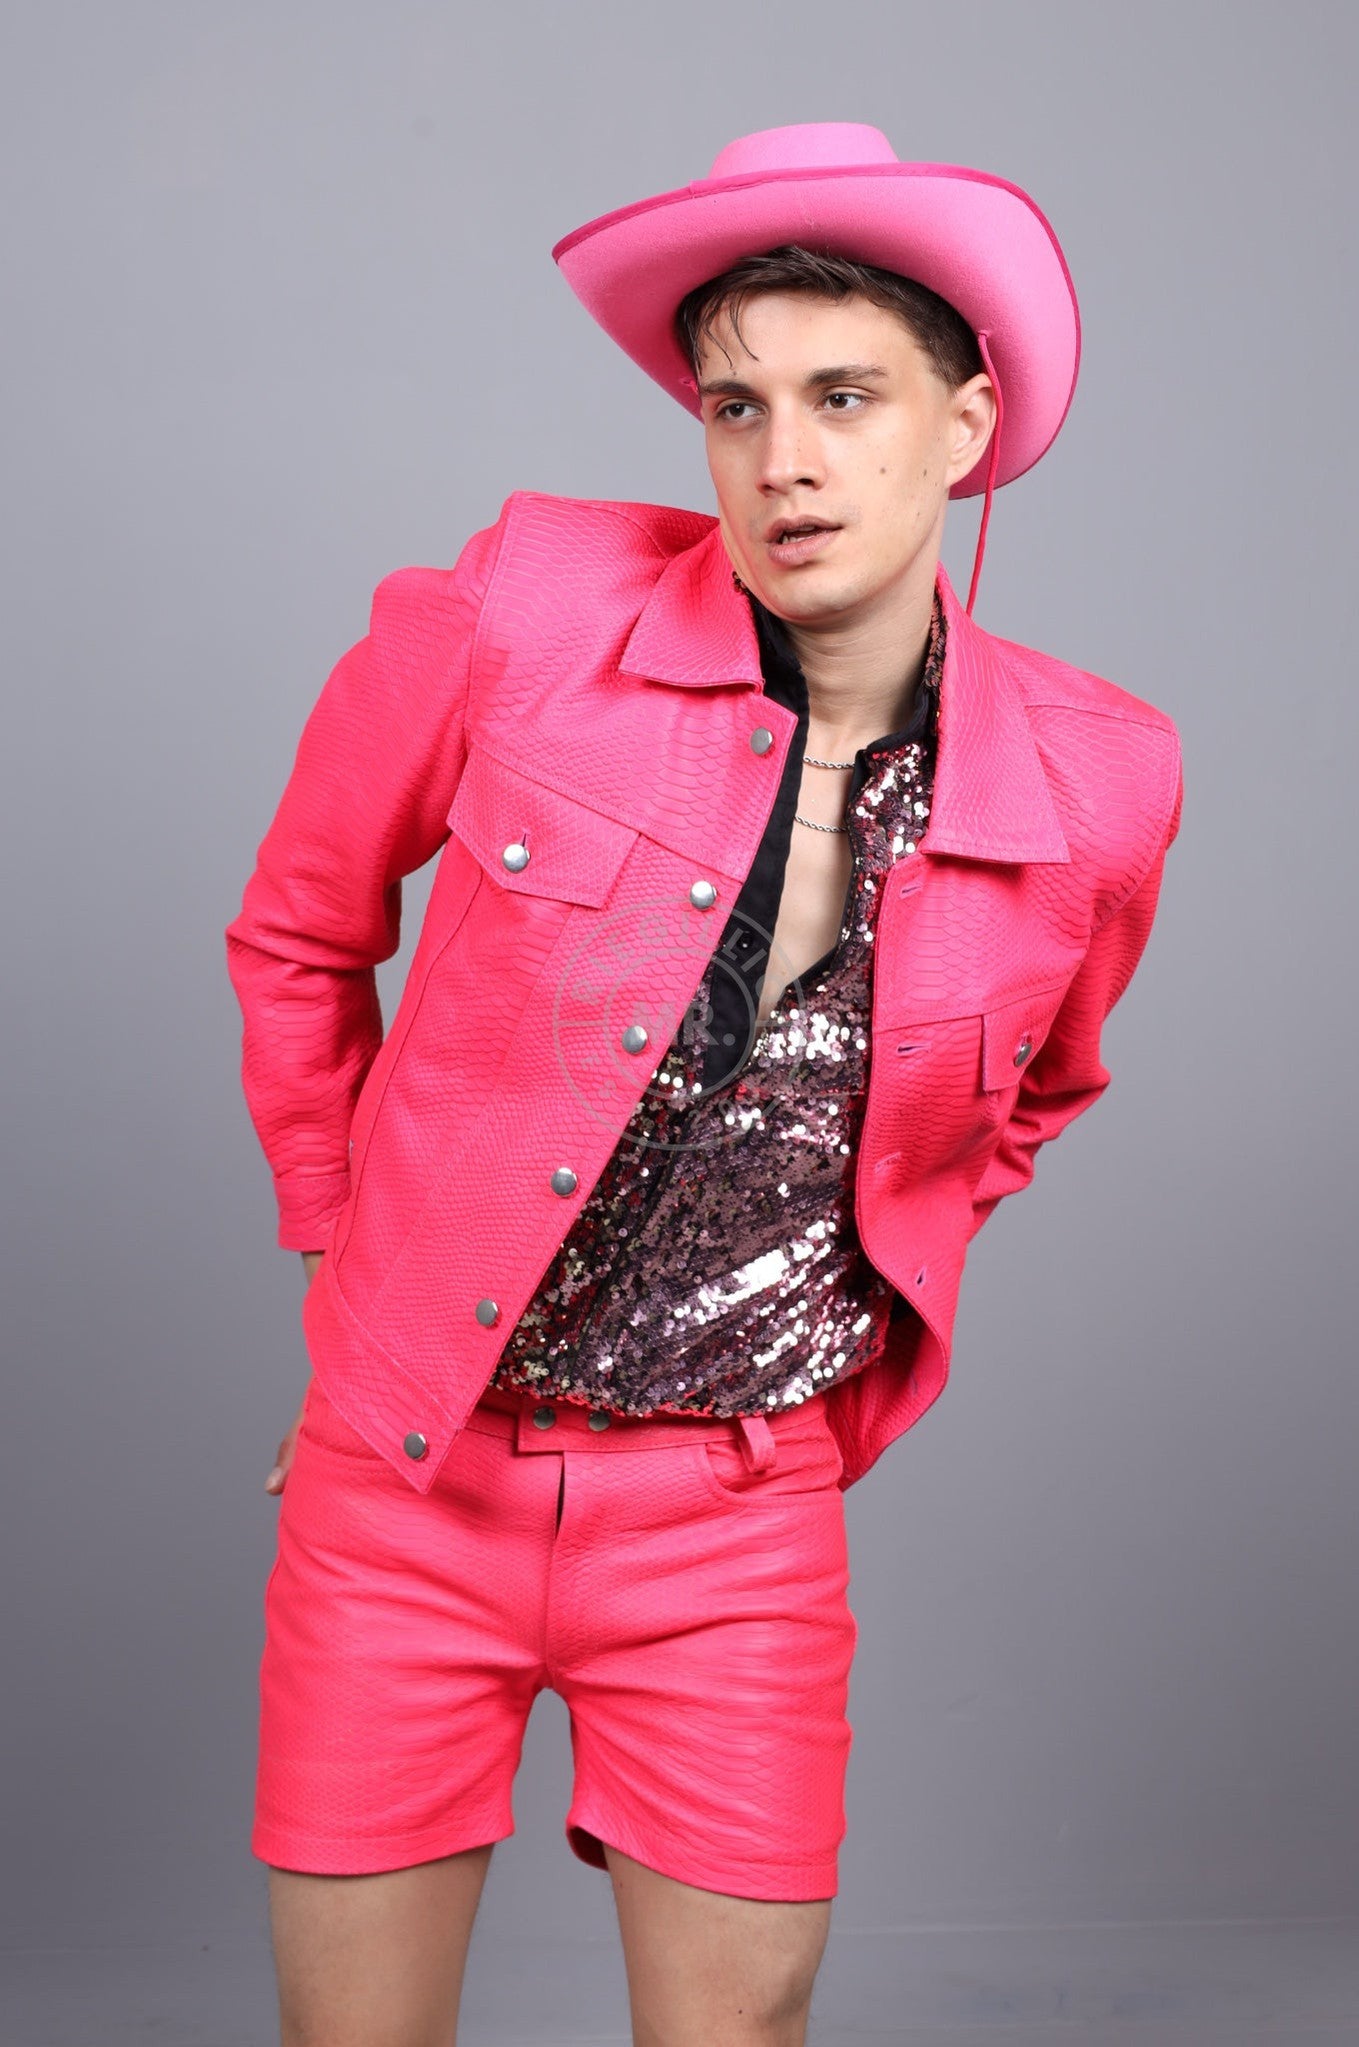 Leather Snake Trucker Jacket - Neon Pink at MR. Riegillio